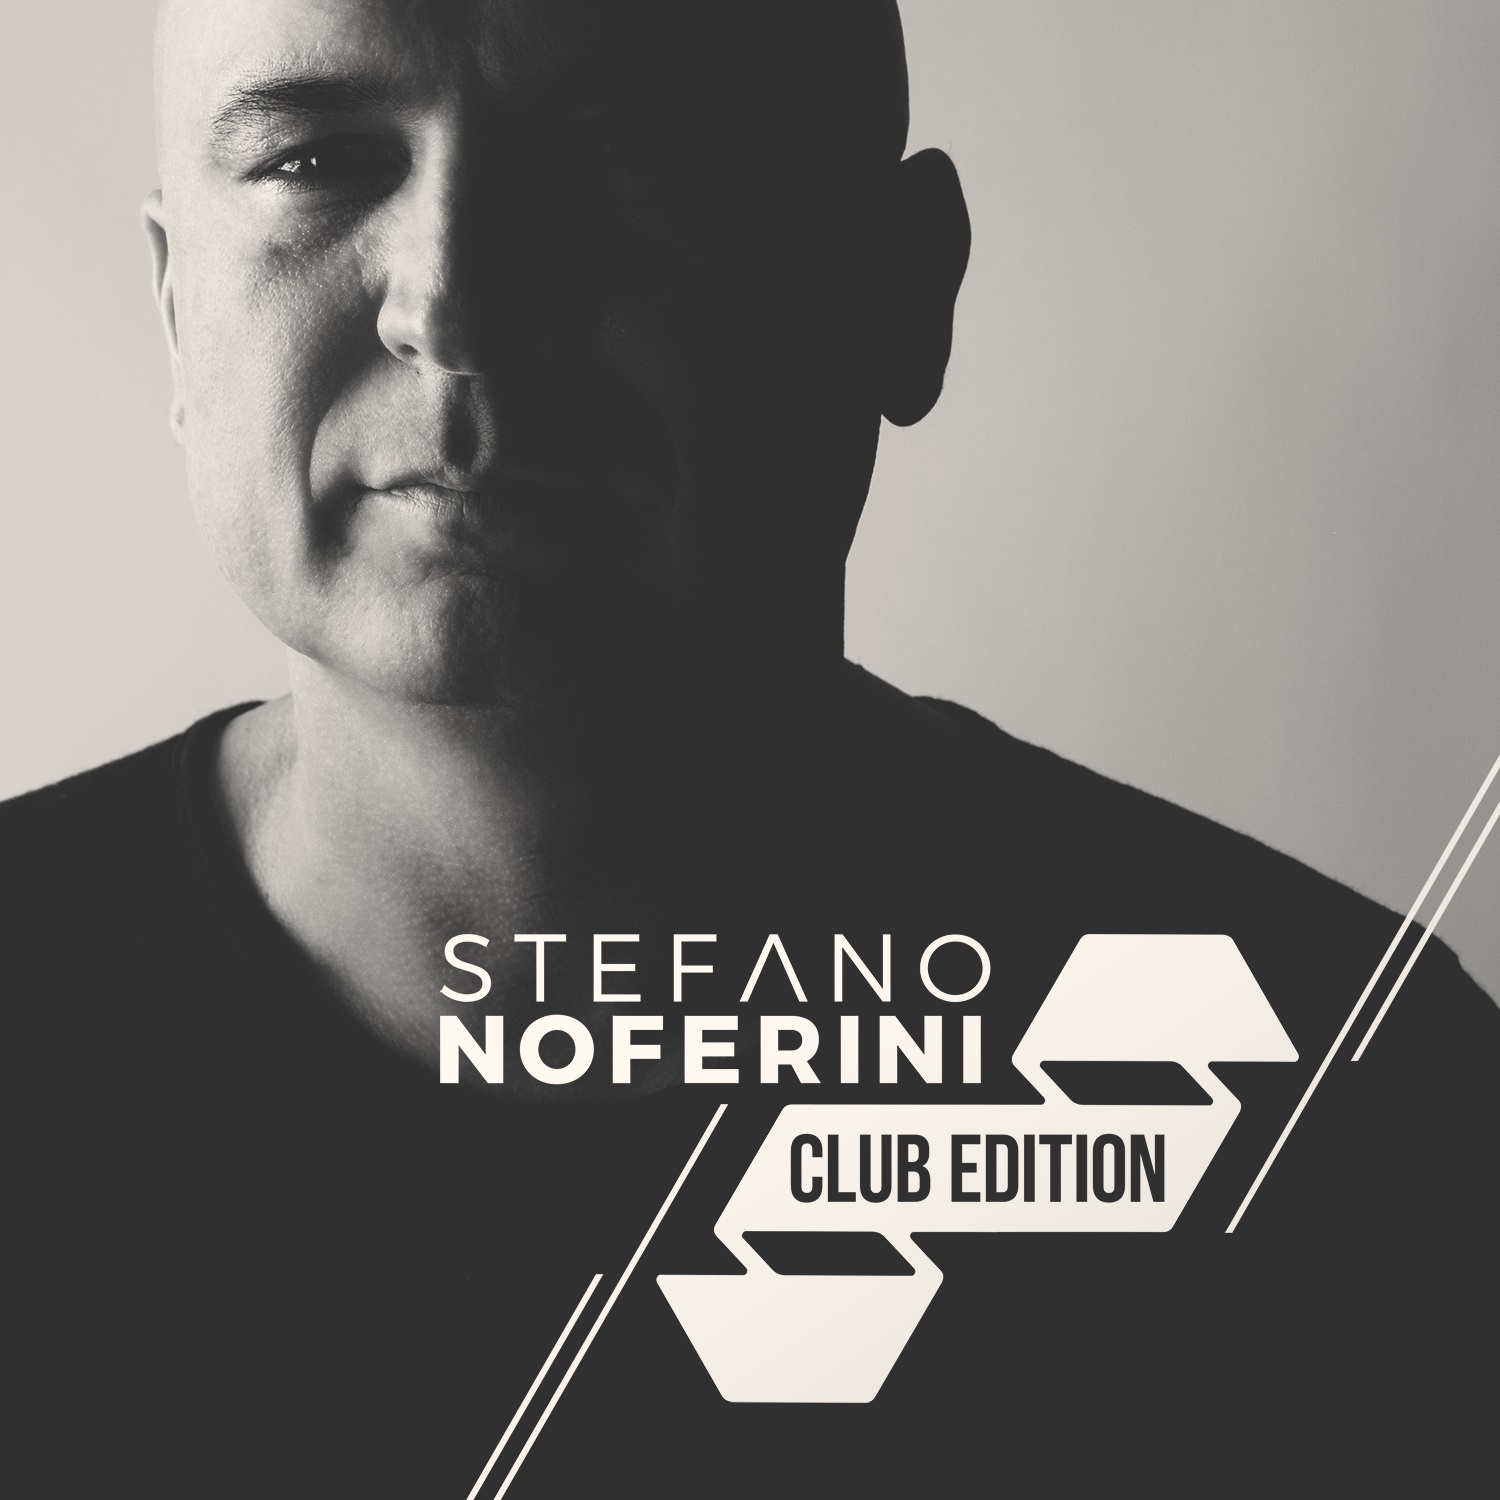 Delta Podcasts - Club Edition by Stefano Noferini (21.06.2018)